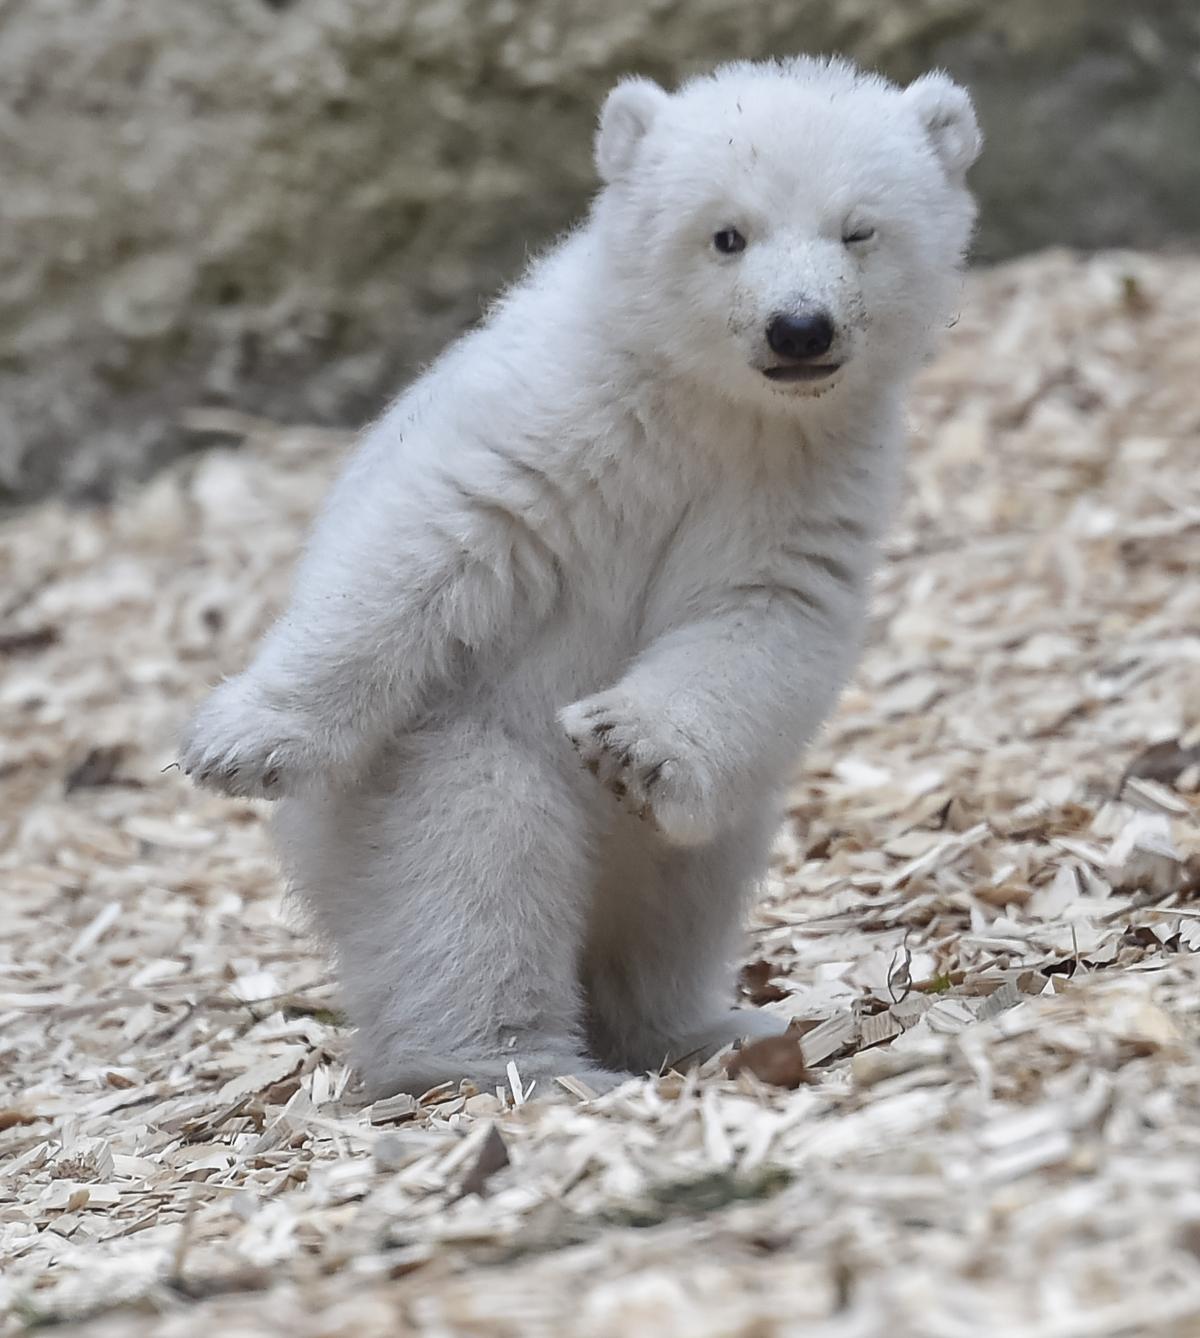 14-week-old polar bear at the zoo Hellabrunn in Munich